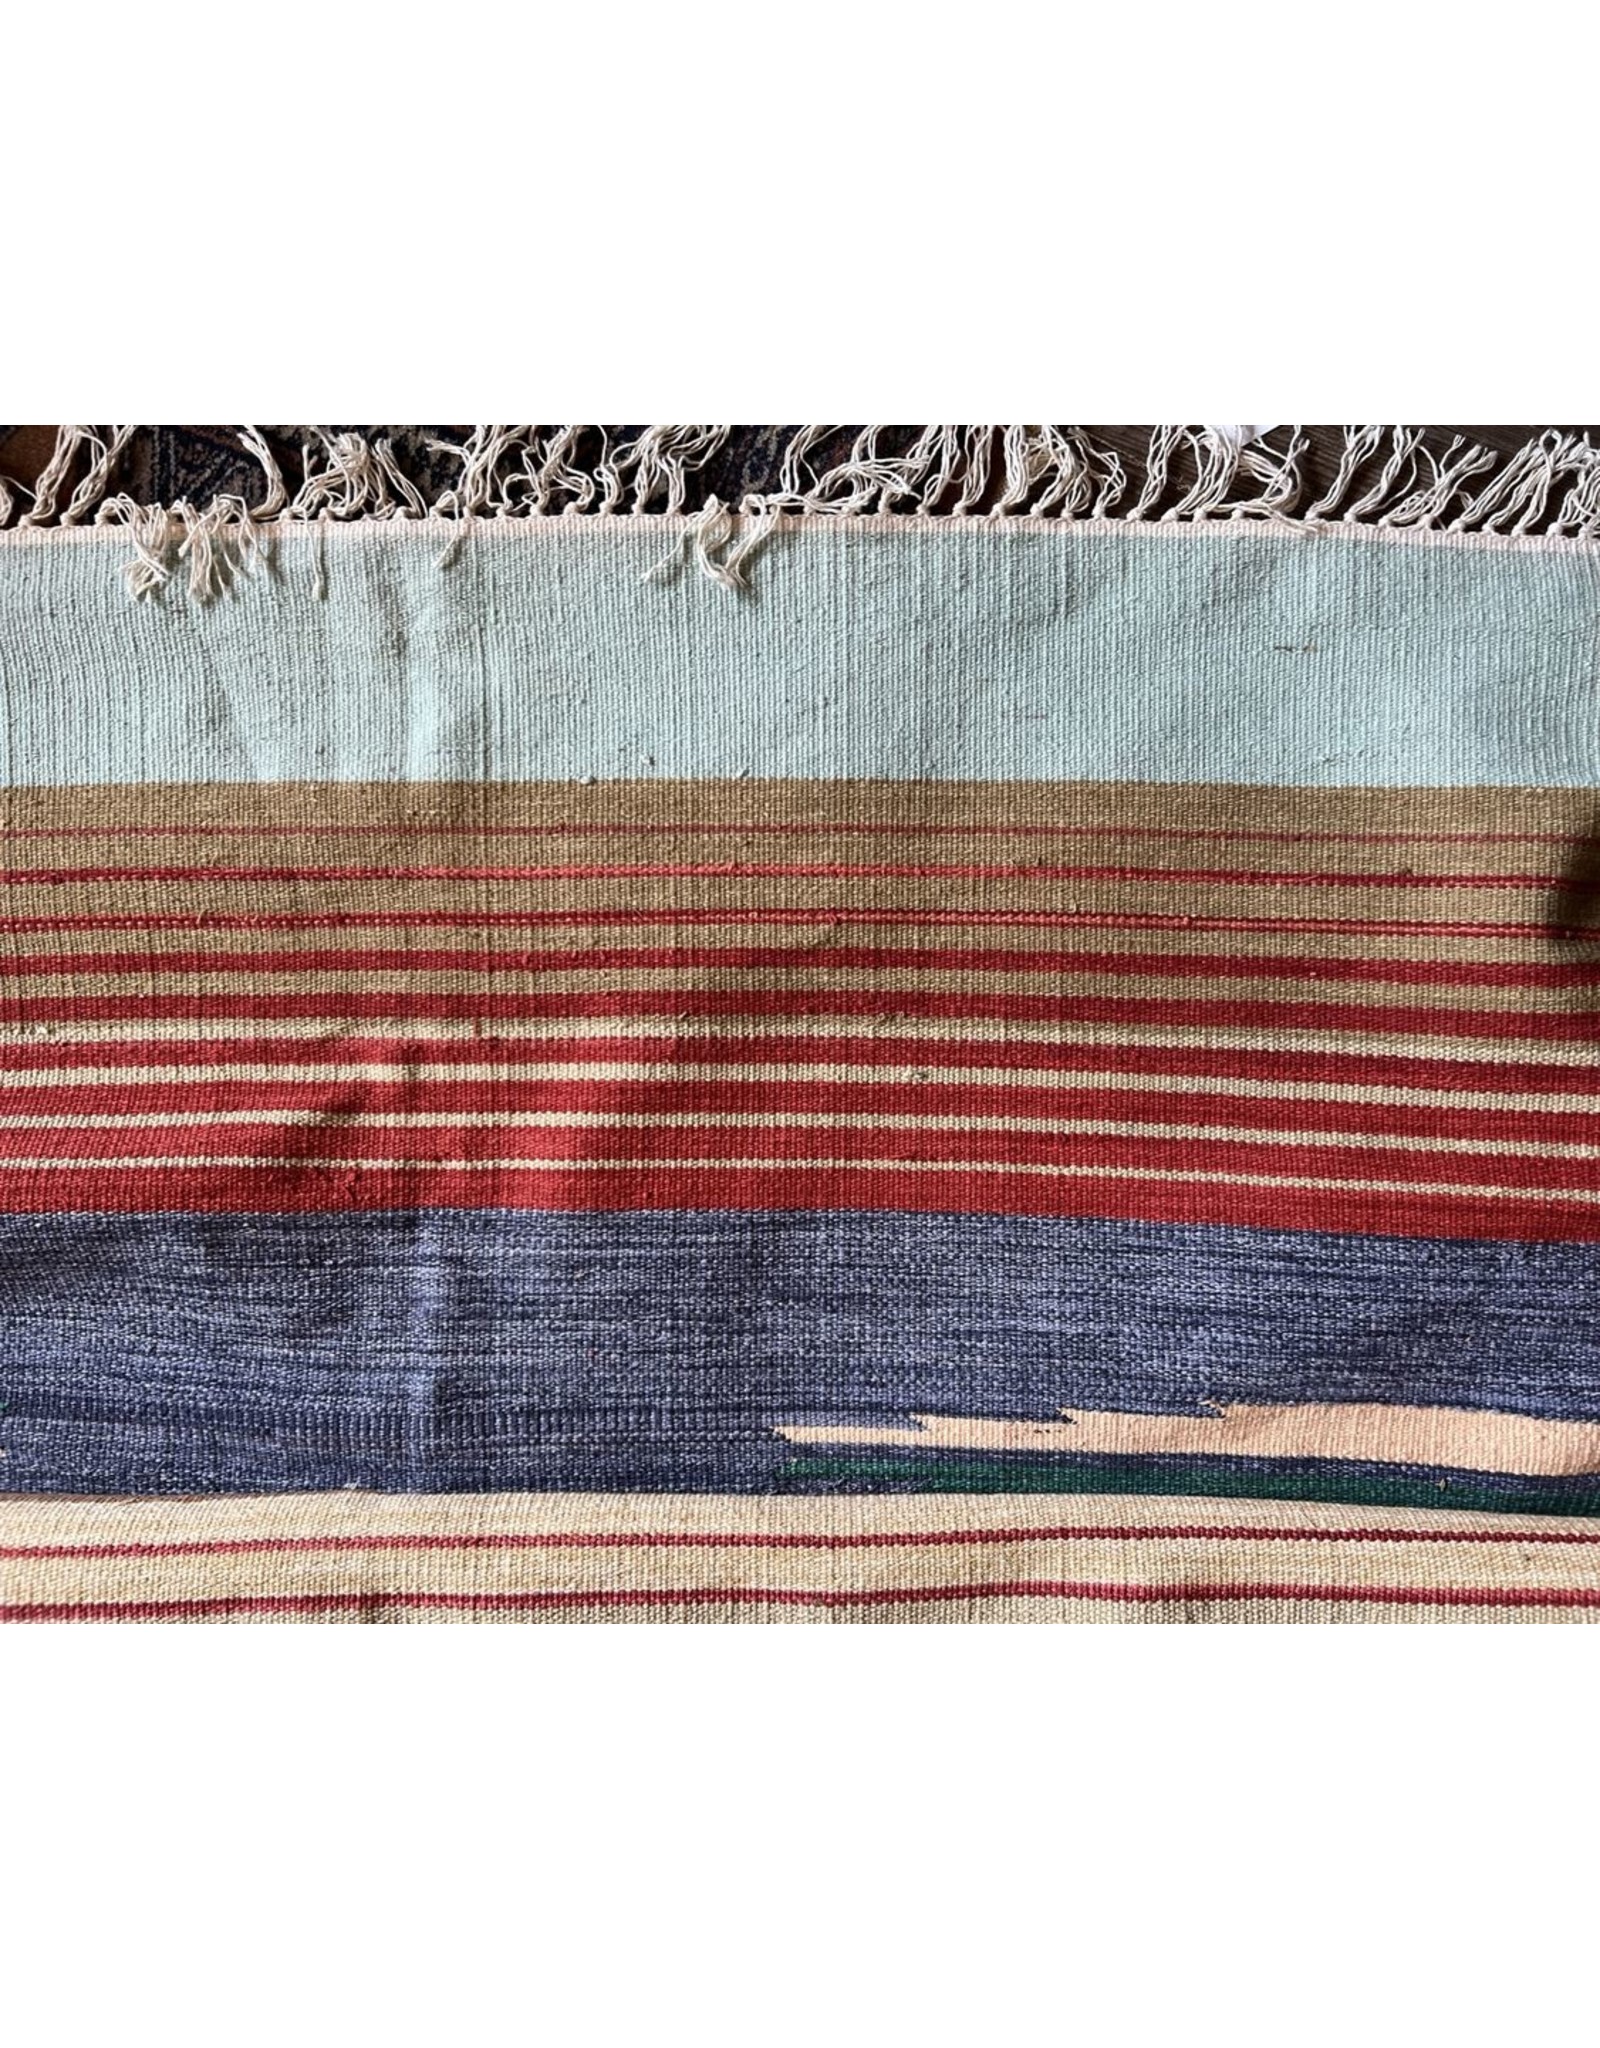 Carpet - flat weave rug, bright colours 6'6" x 3'11"